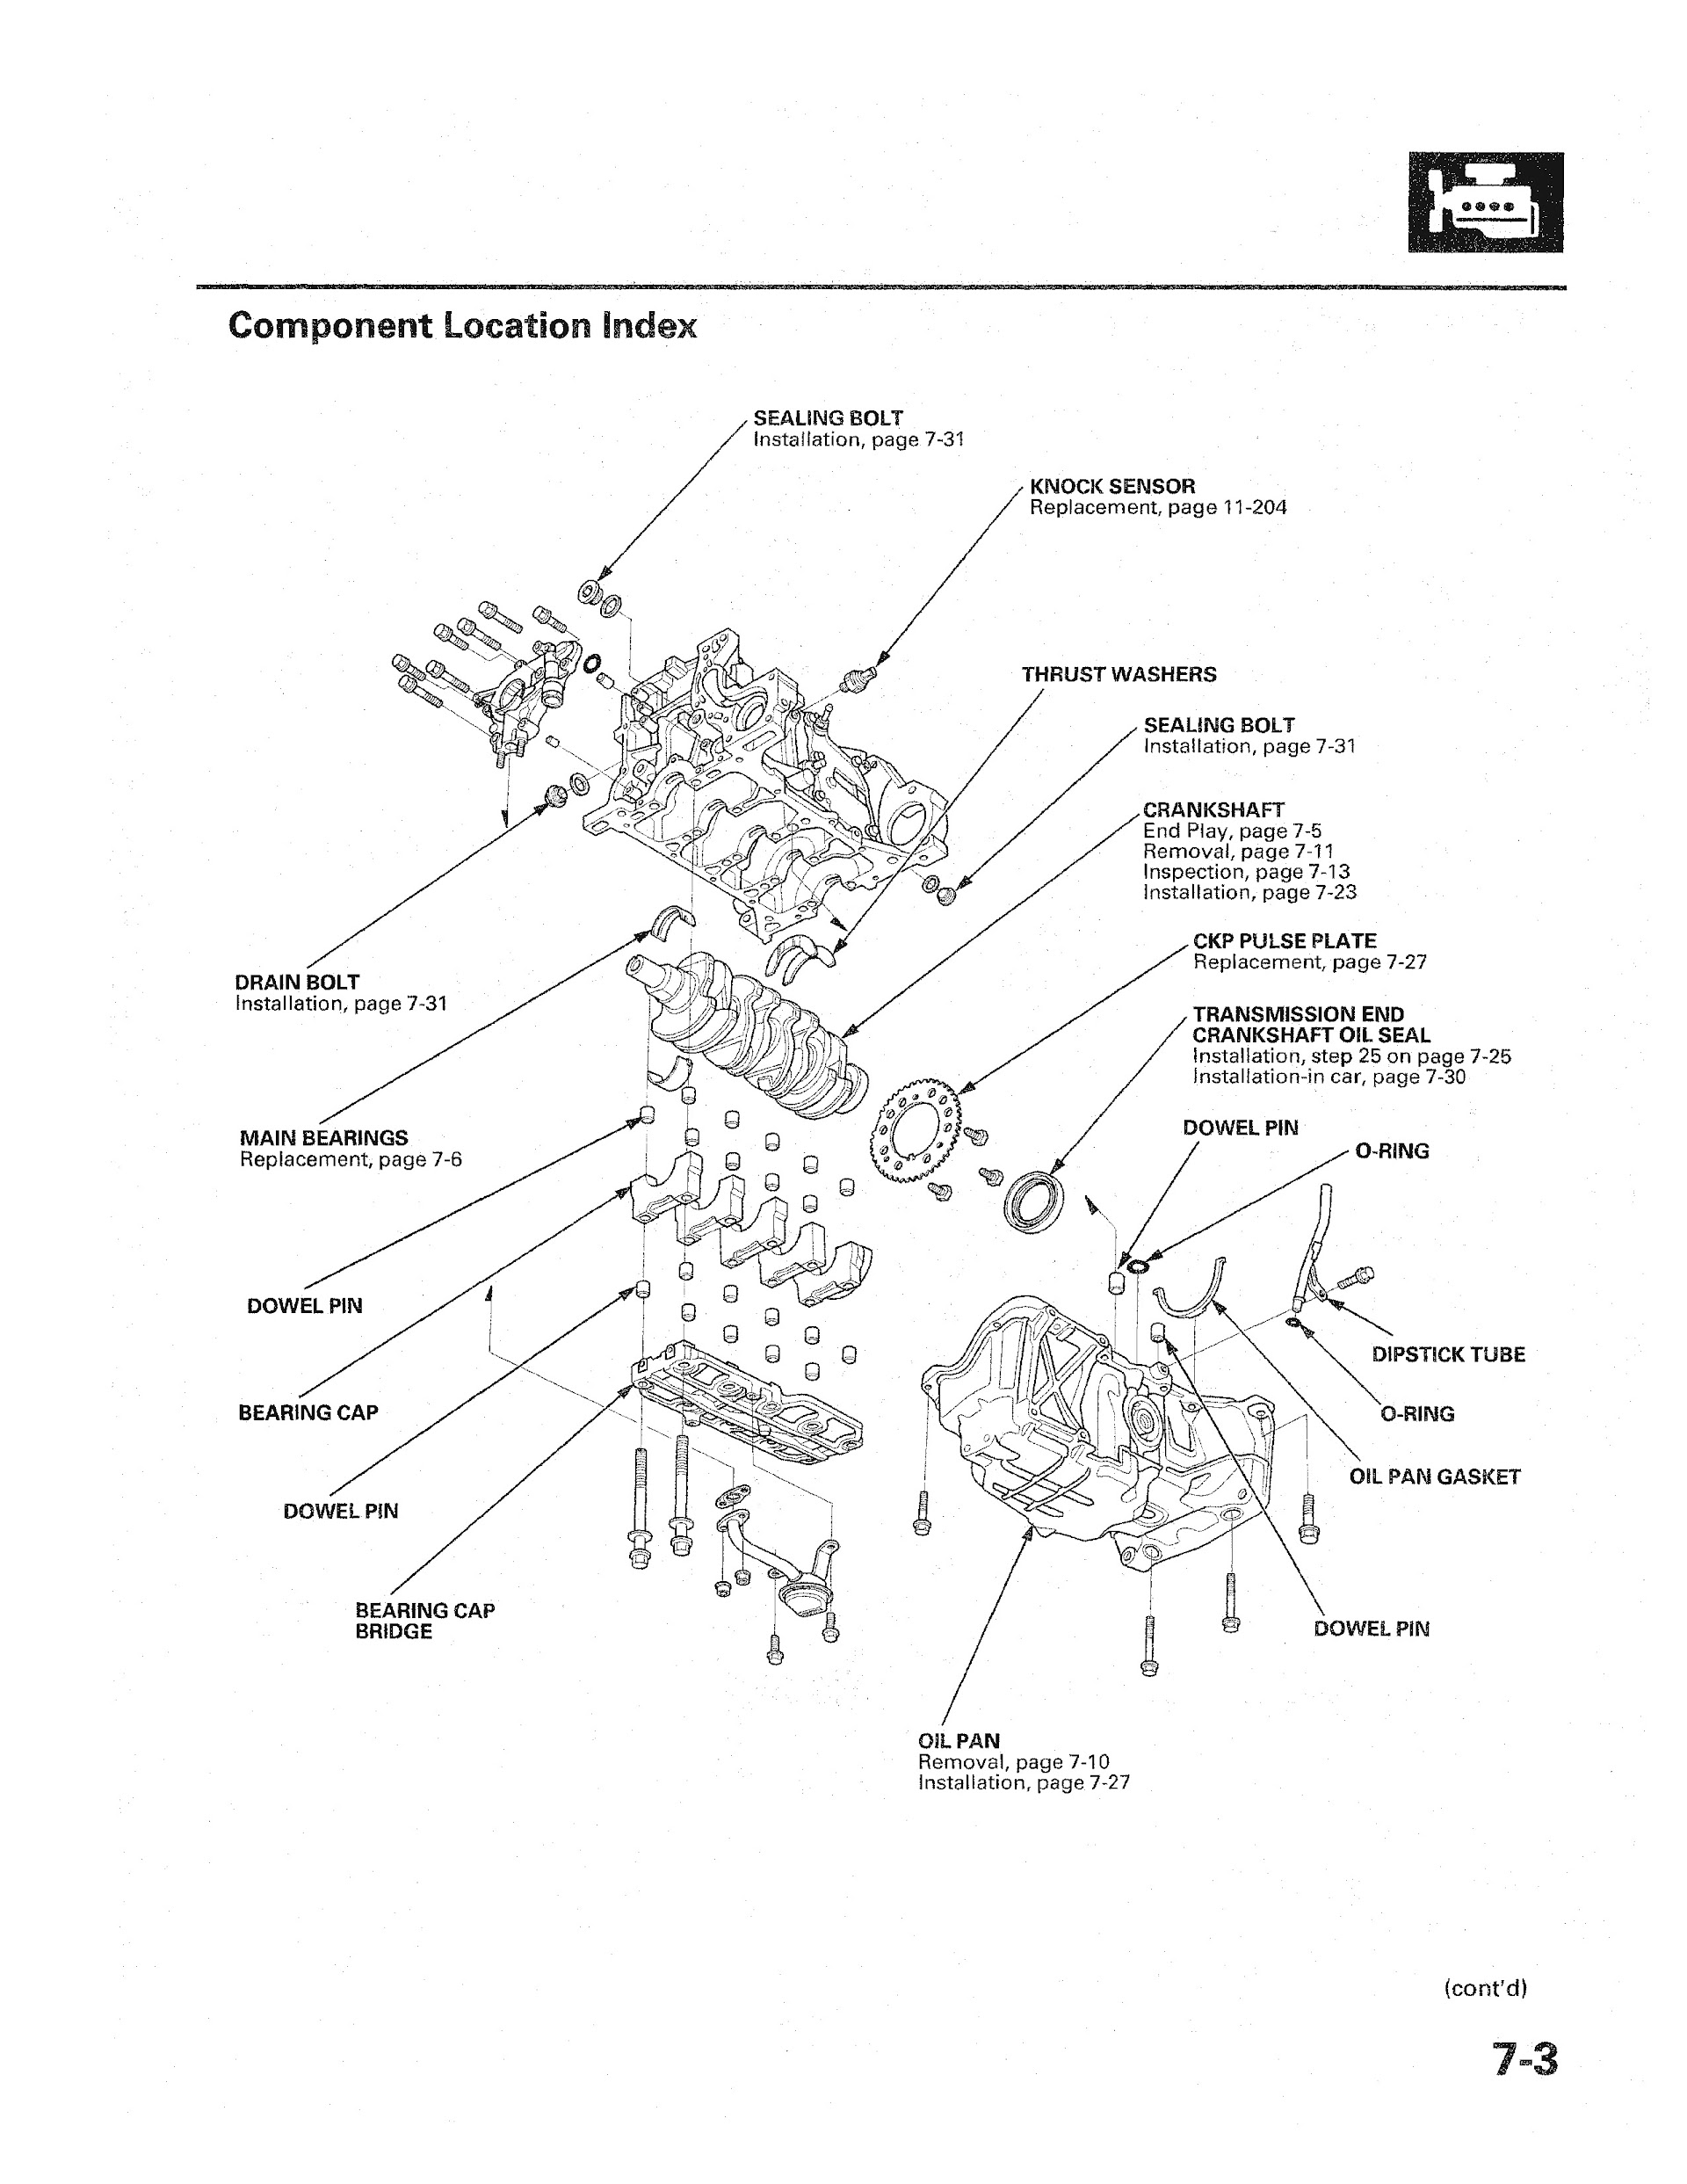 2010-2012 Honda CR-Z Repair Manual, Component Location Index